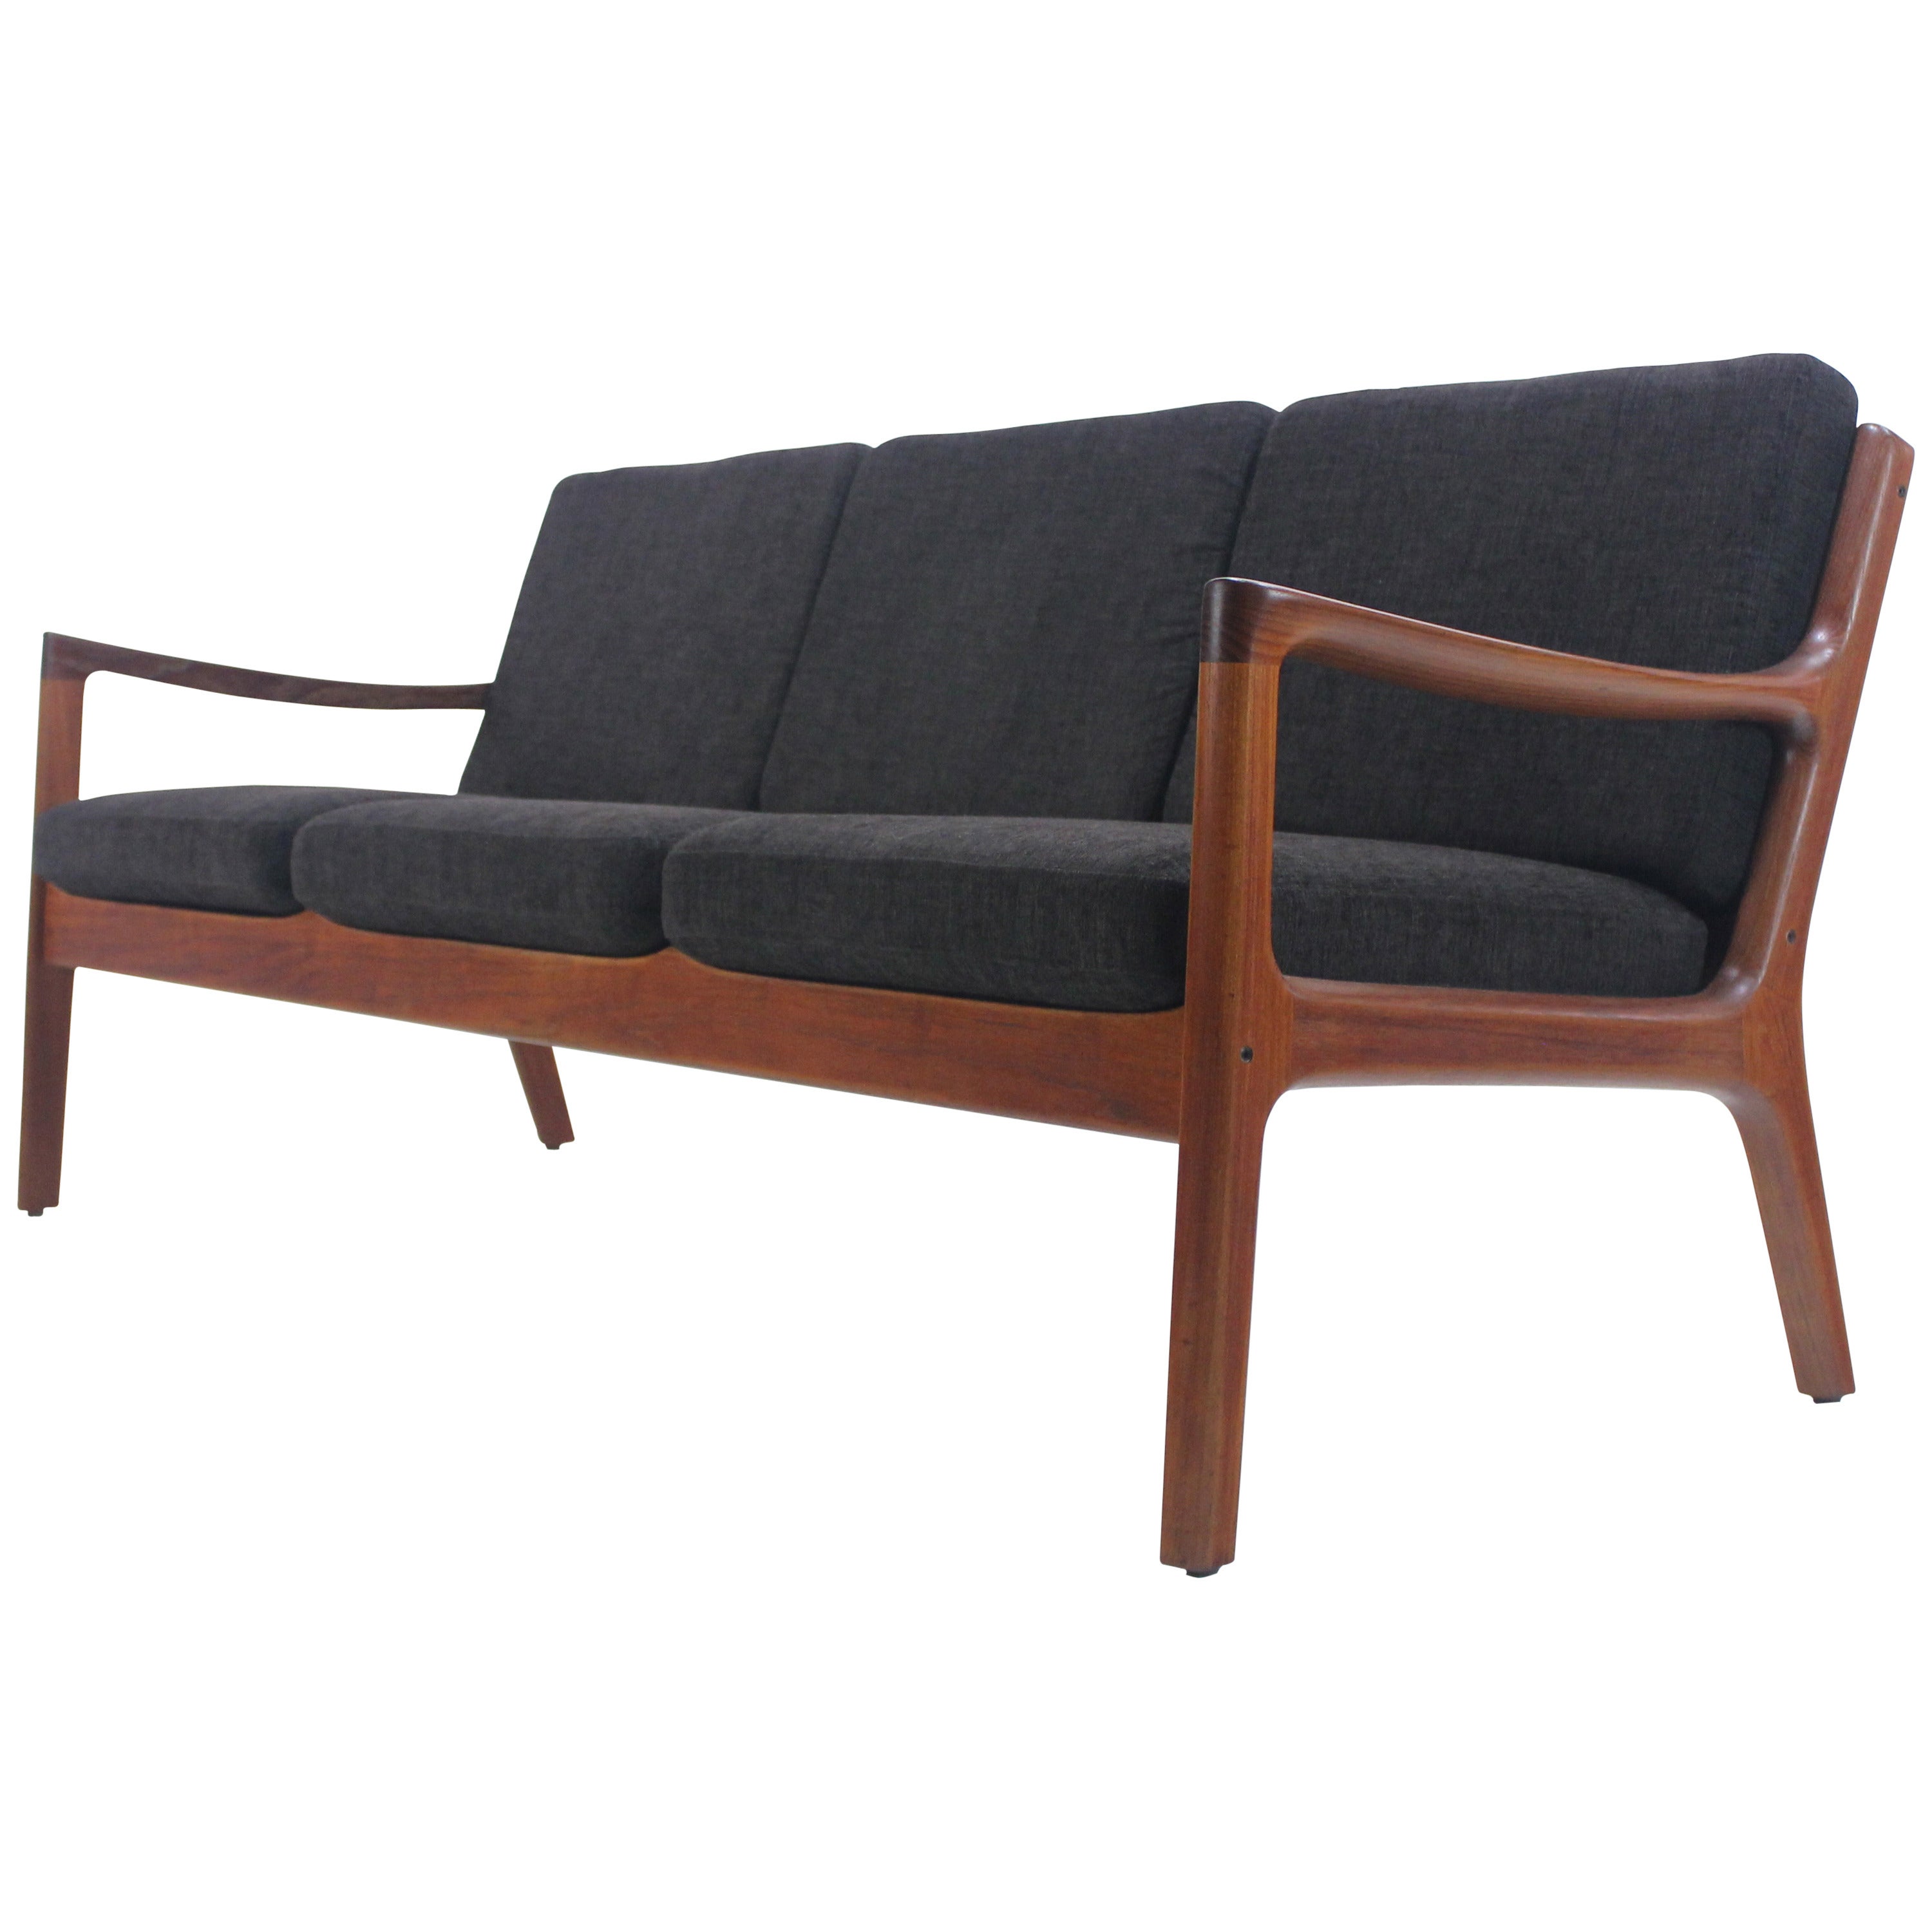 Classic Danish Modern Teak Framed Sofa Designed by Ole Wanscher For Sale